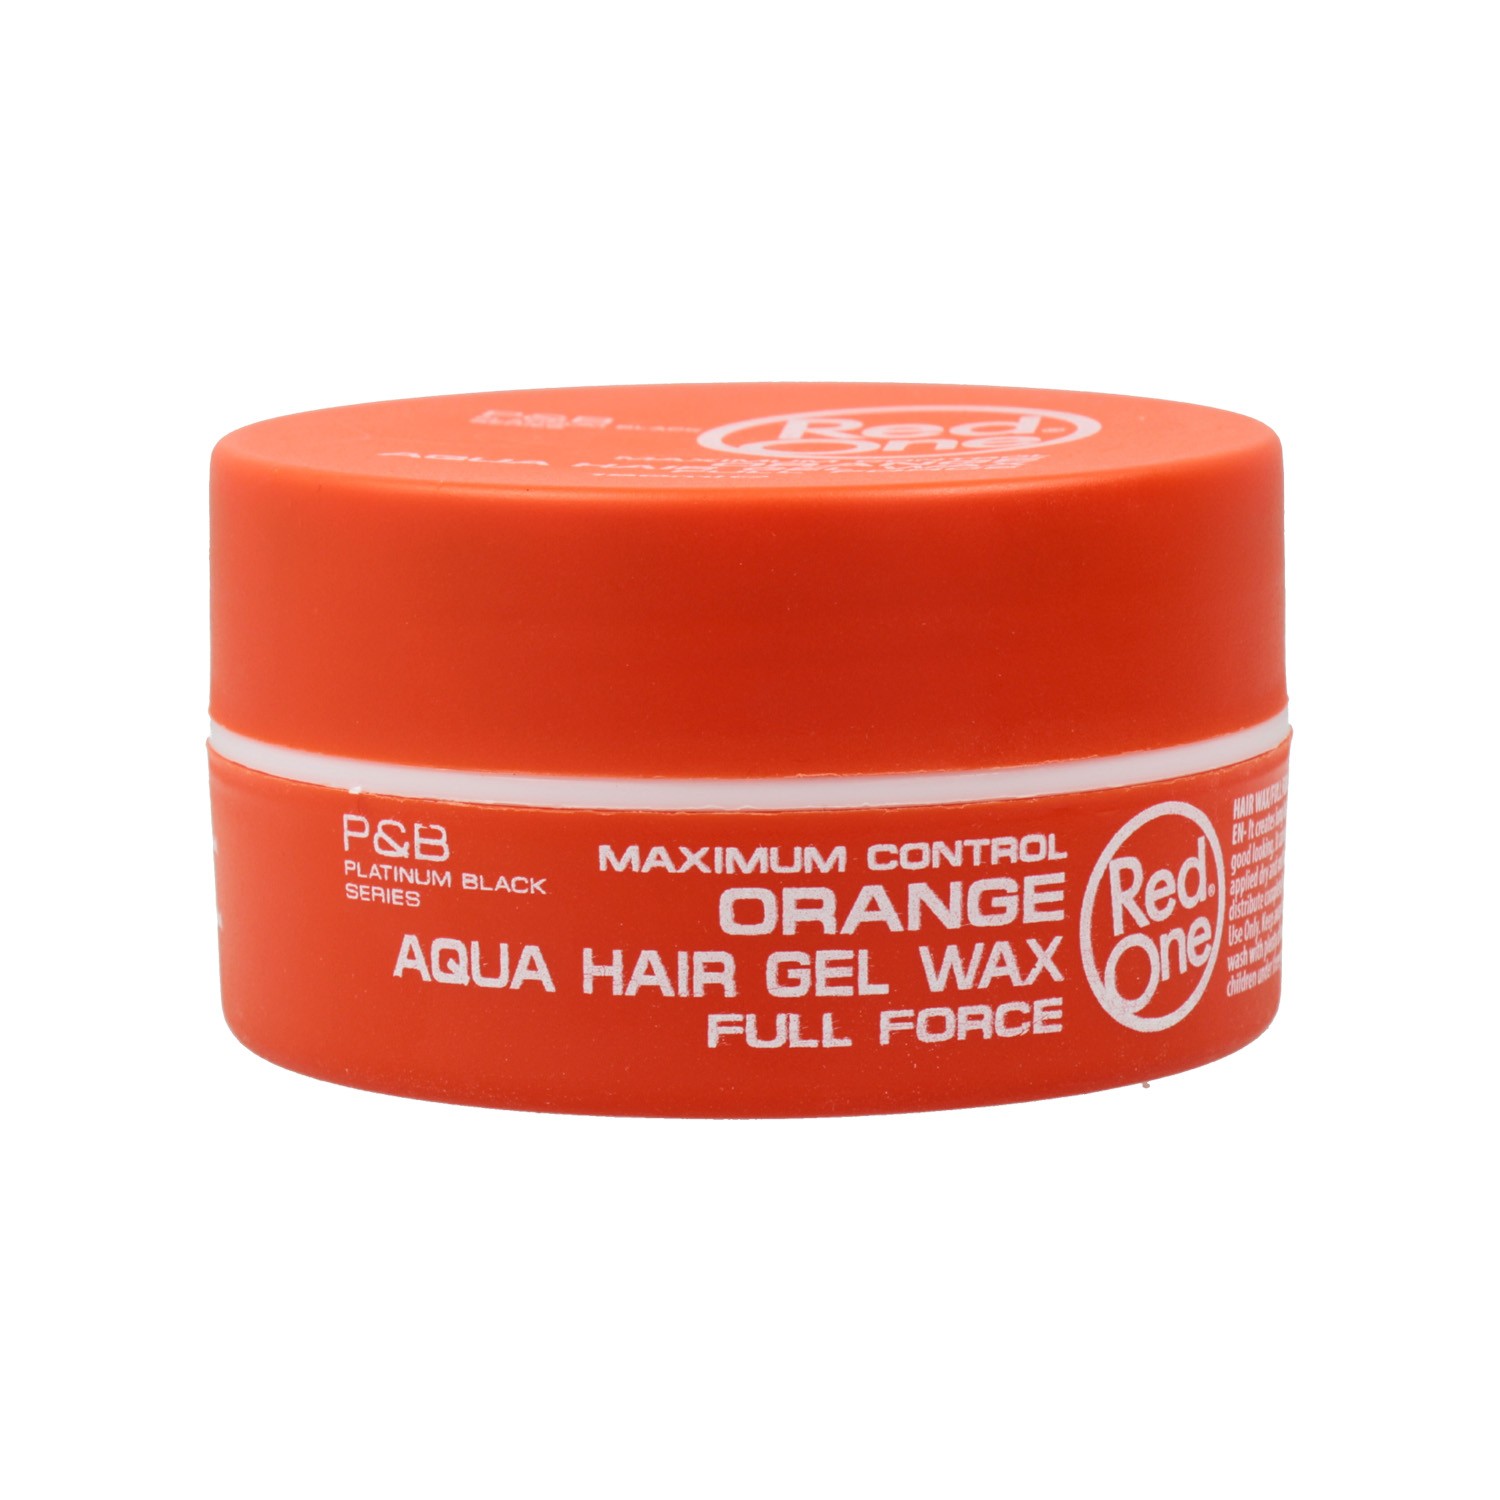 Red One Full Force Aqua Hair Wax Orange Gel 150ml at the best price...